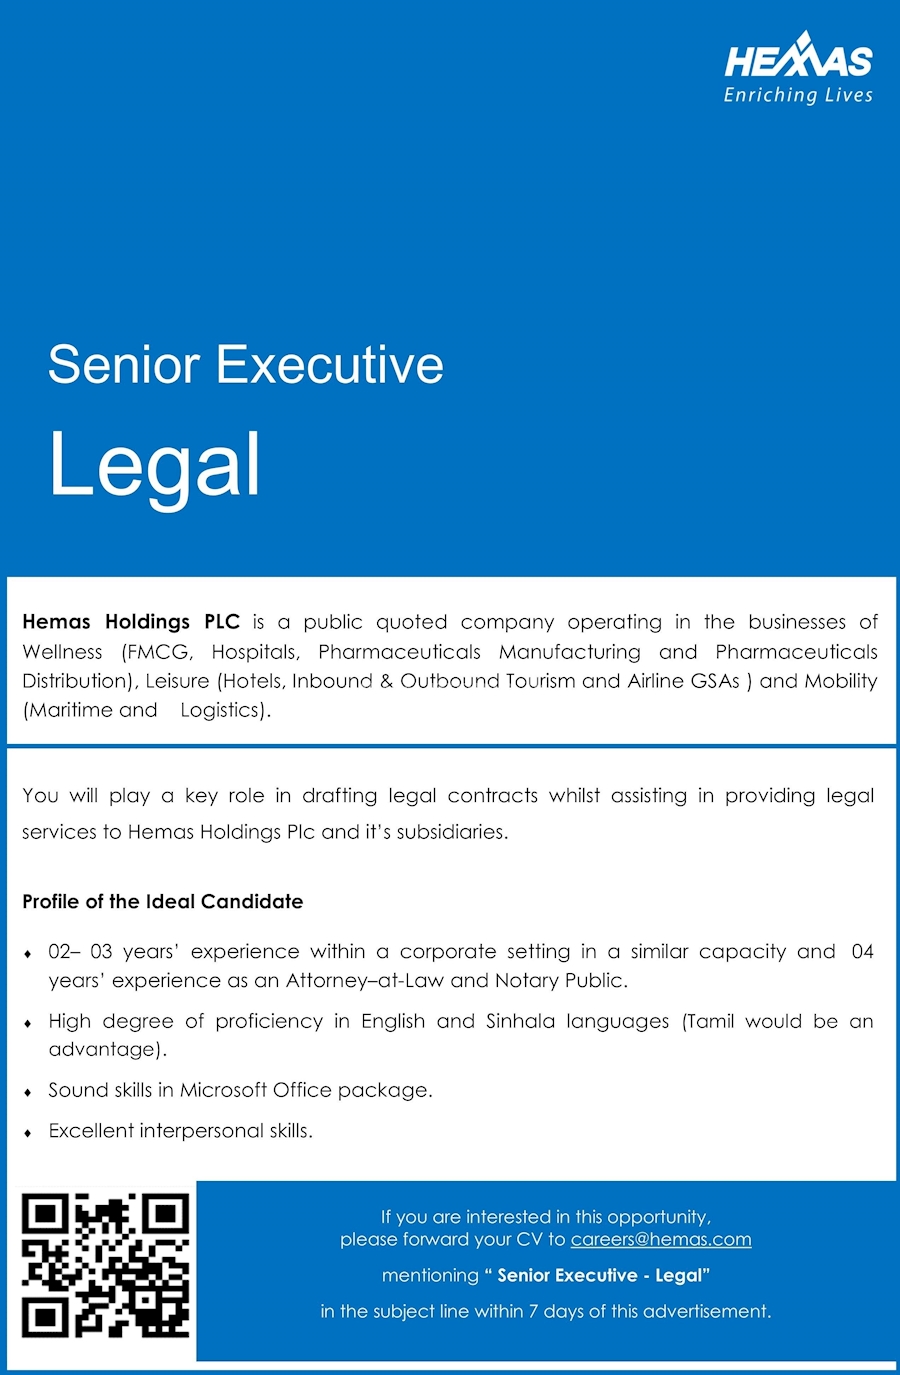 Senior Executive - Legal